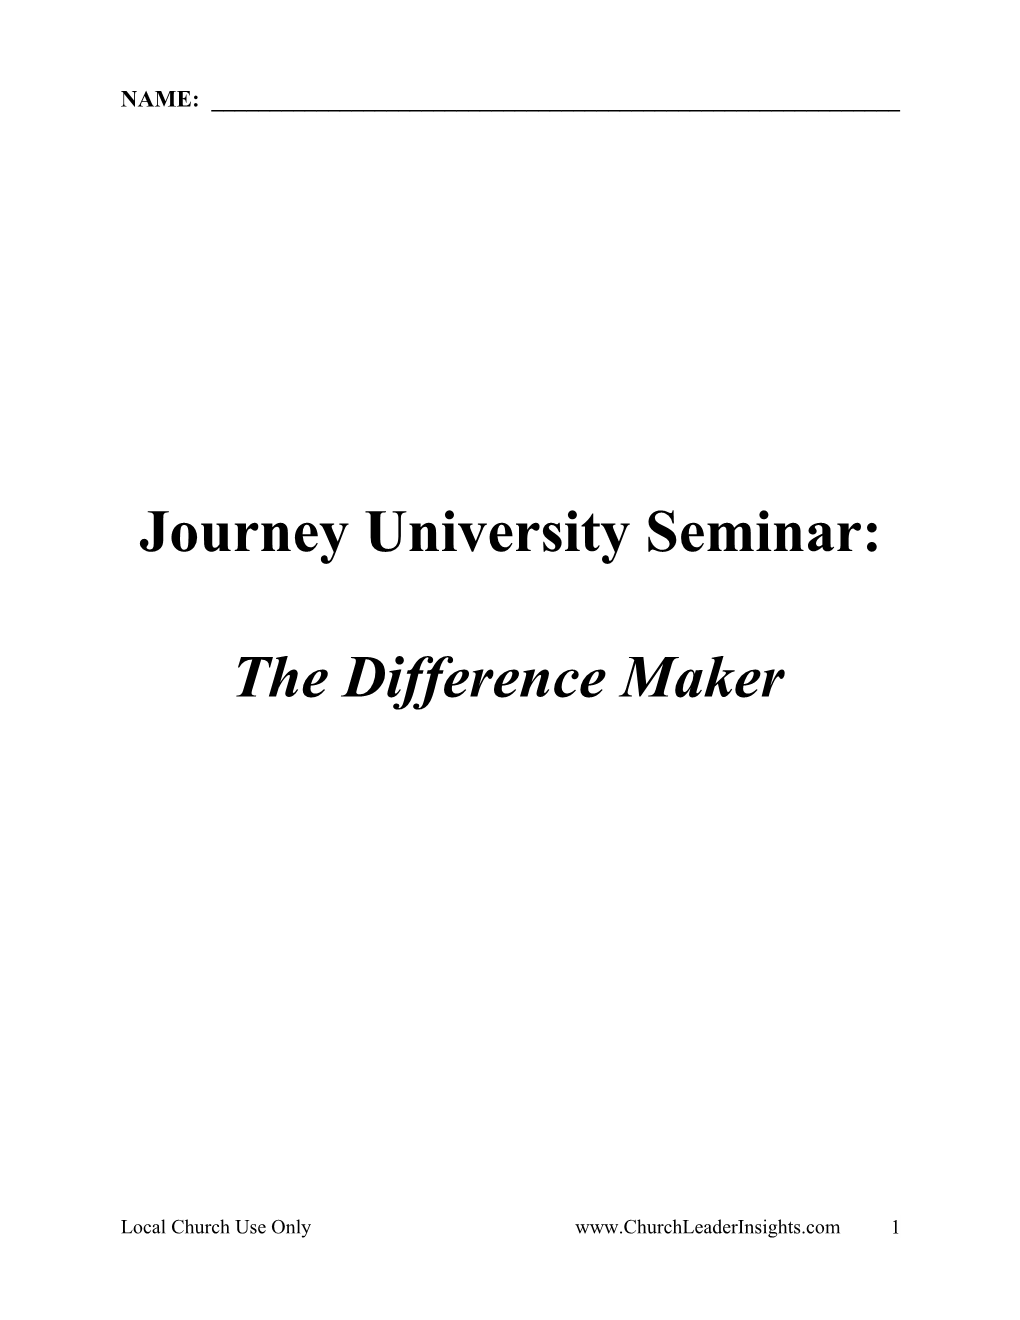 Journey University Seminar